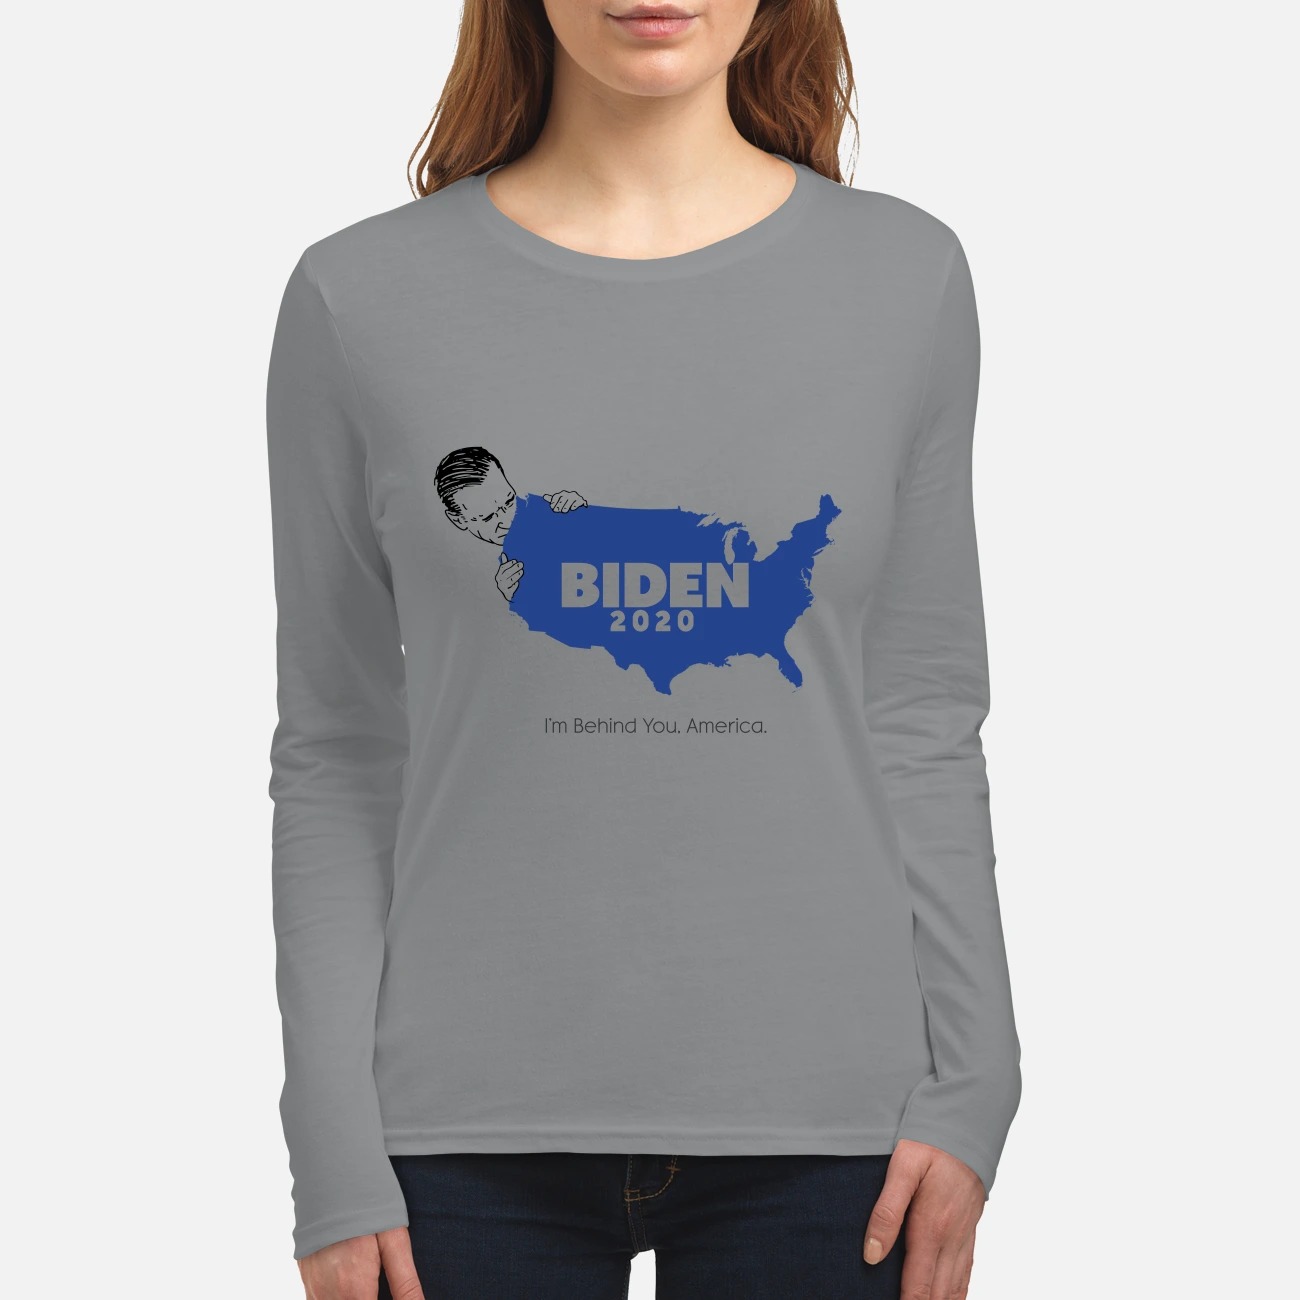 Biden 2020 I'm behind you America women's long sleeved shirt